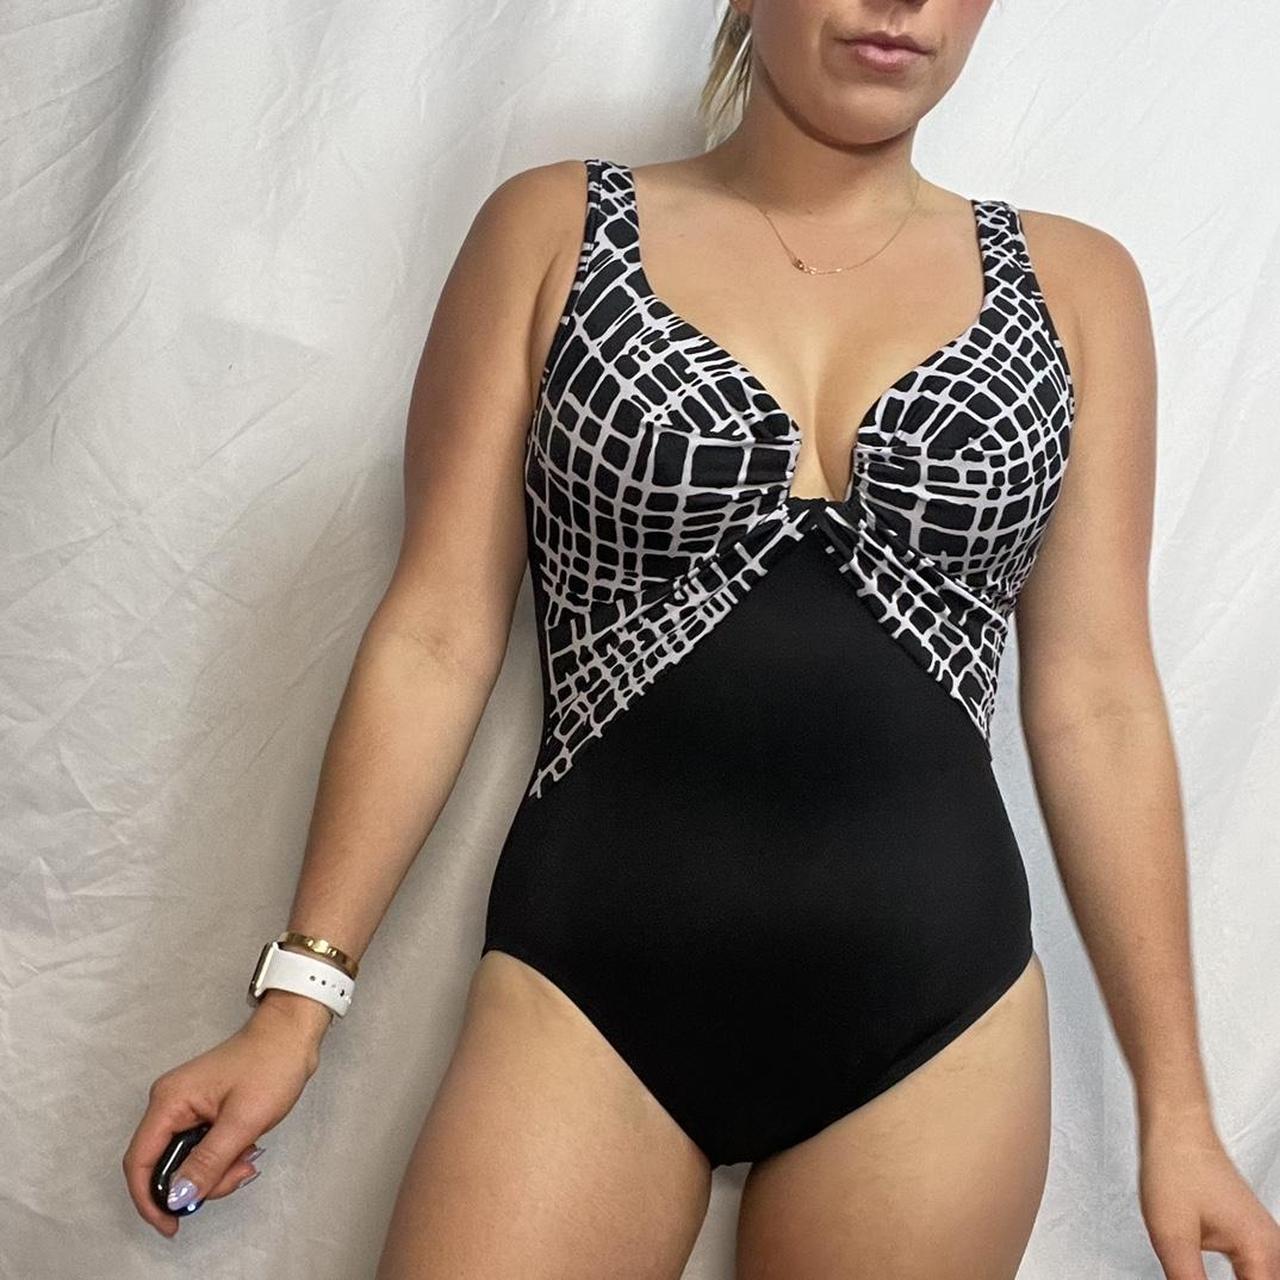 Product Image 1 - 👽 Dorina
Garissa Swimsuit fits like